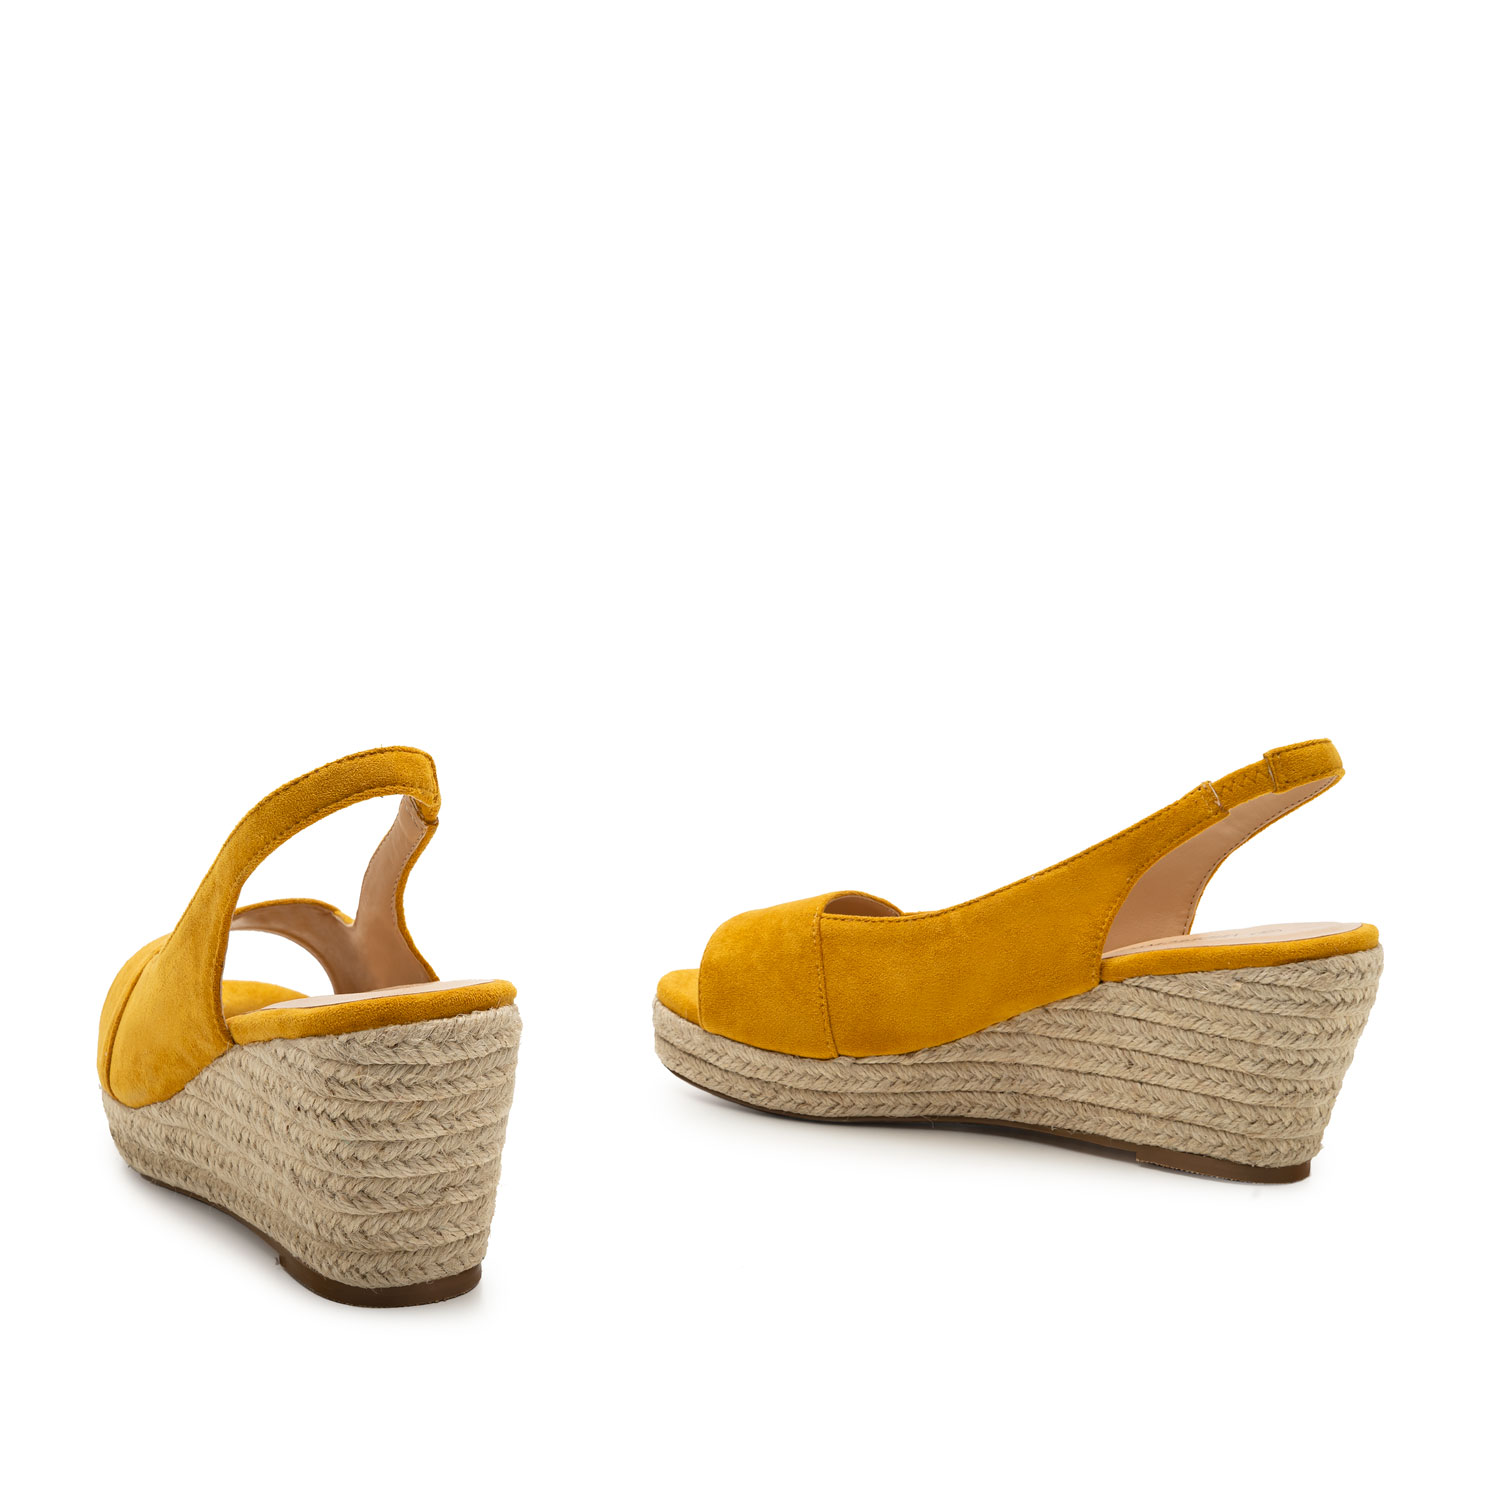 Sandalen mit Keilabsatz aus gelbem Velourlederimitat 